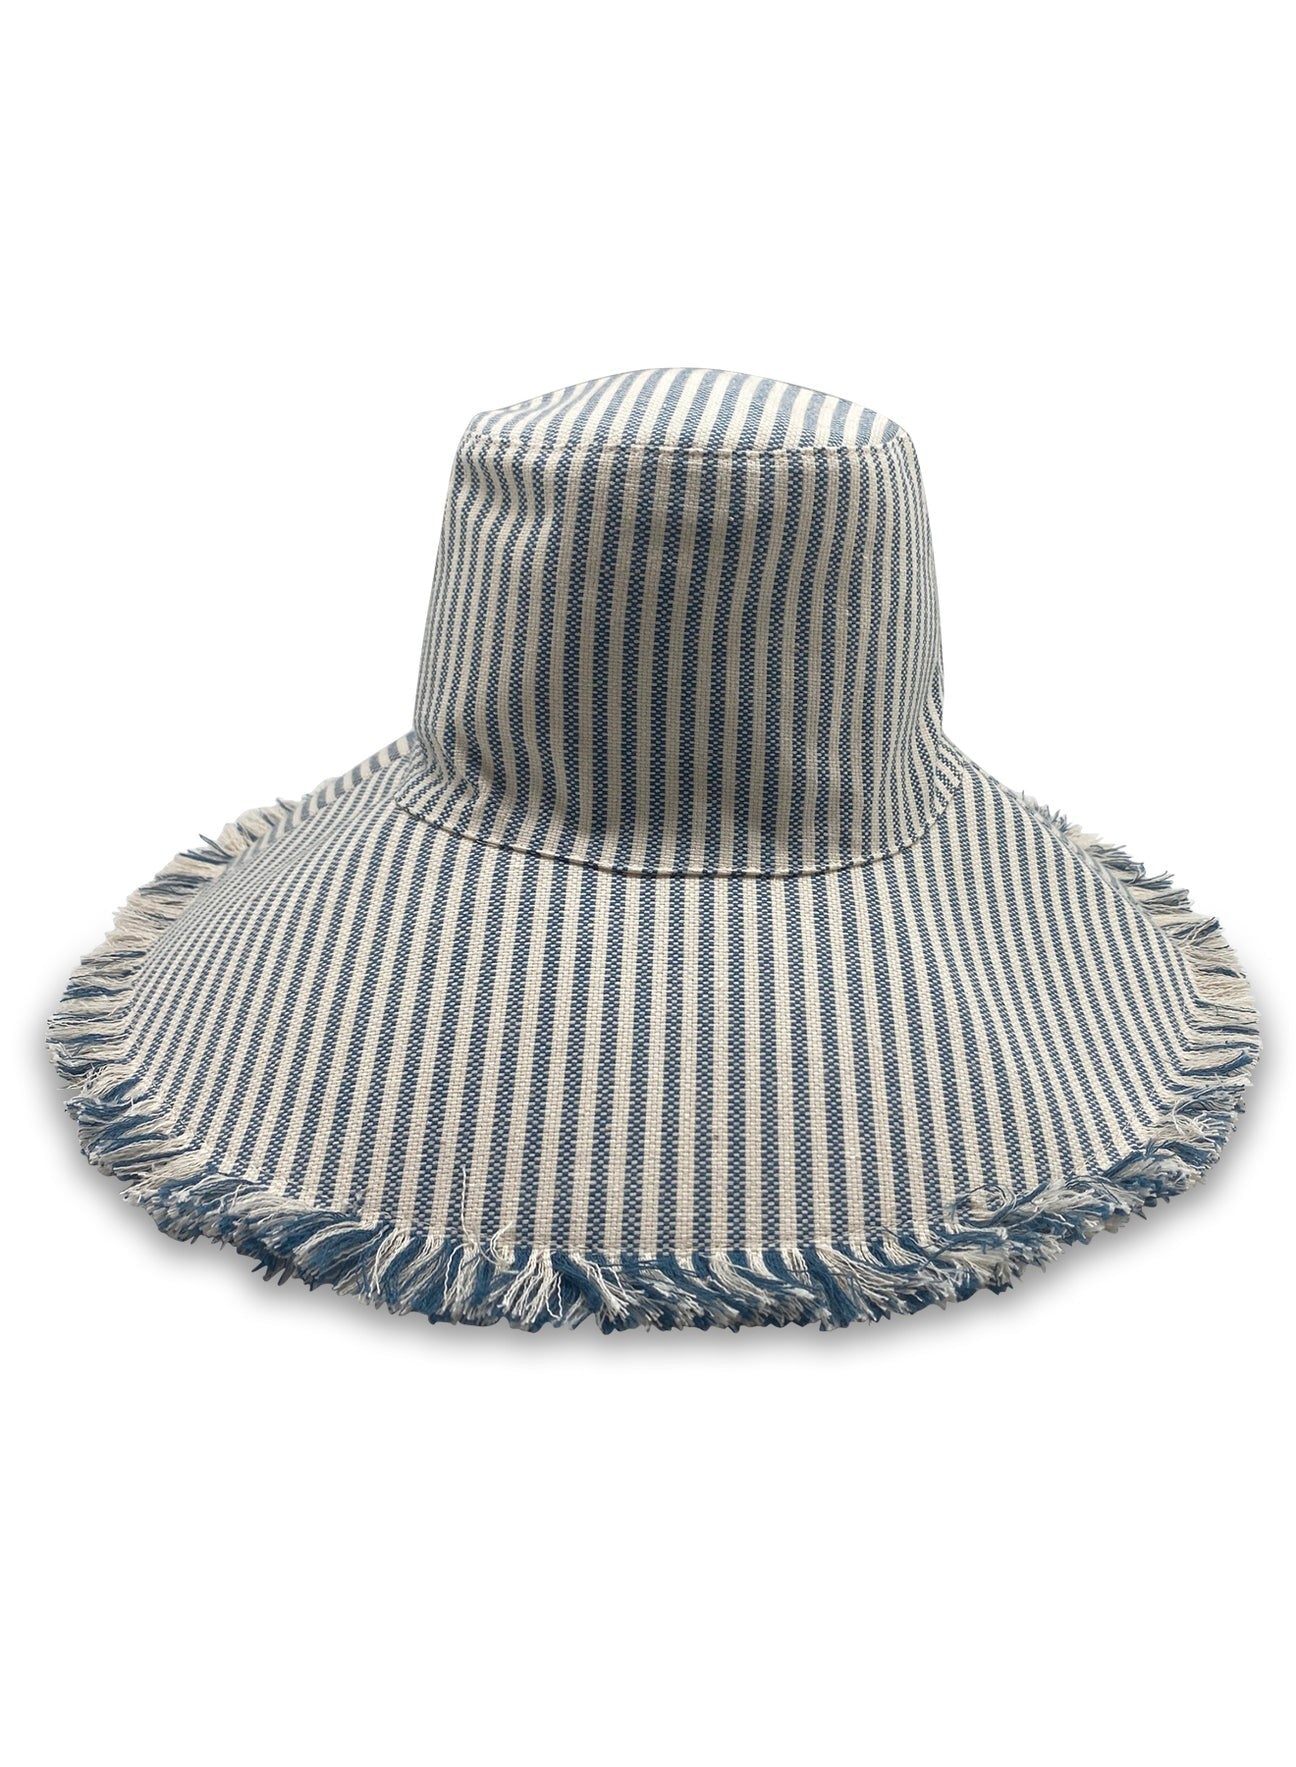 Hat Attack Traveler Canvas Packable Sun Hat Navy Stripe